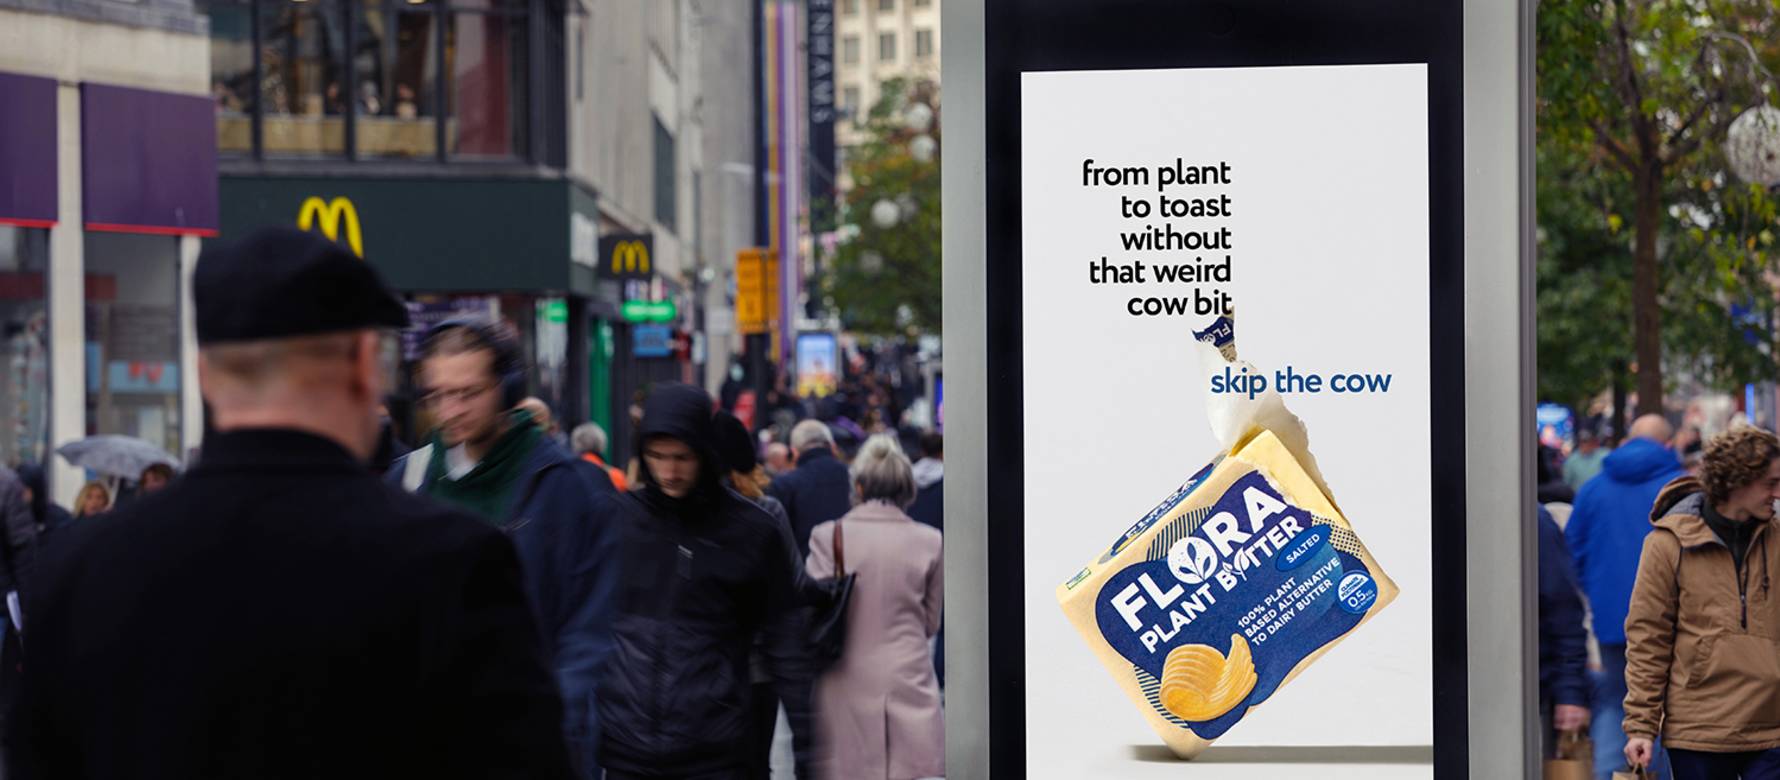 Flora plant butter advert on Adshel Live poster on high street